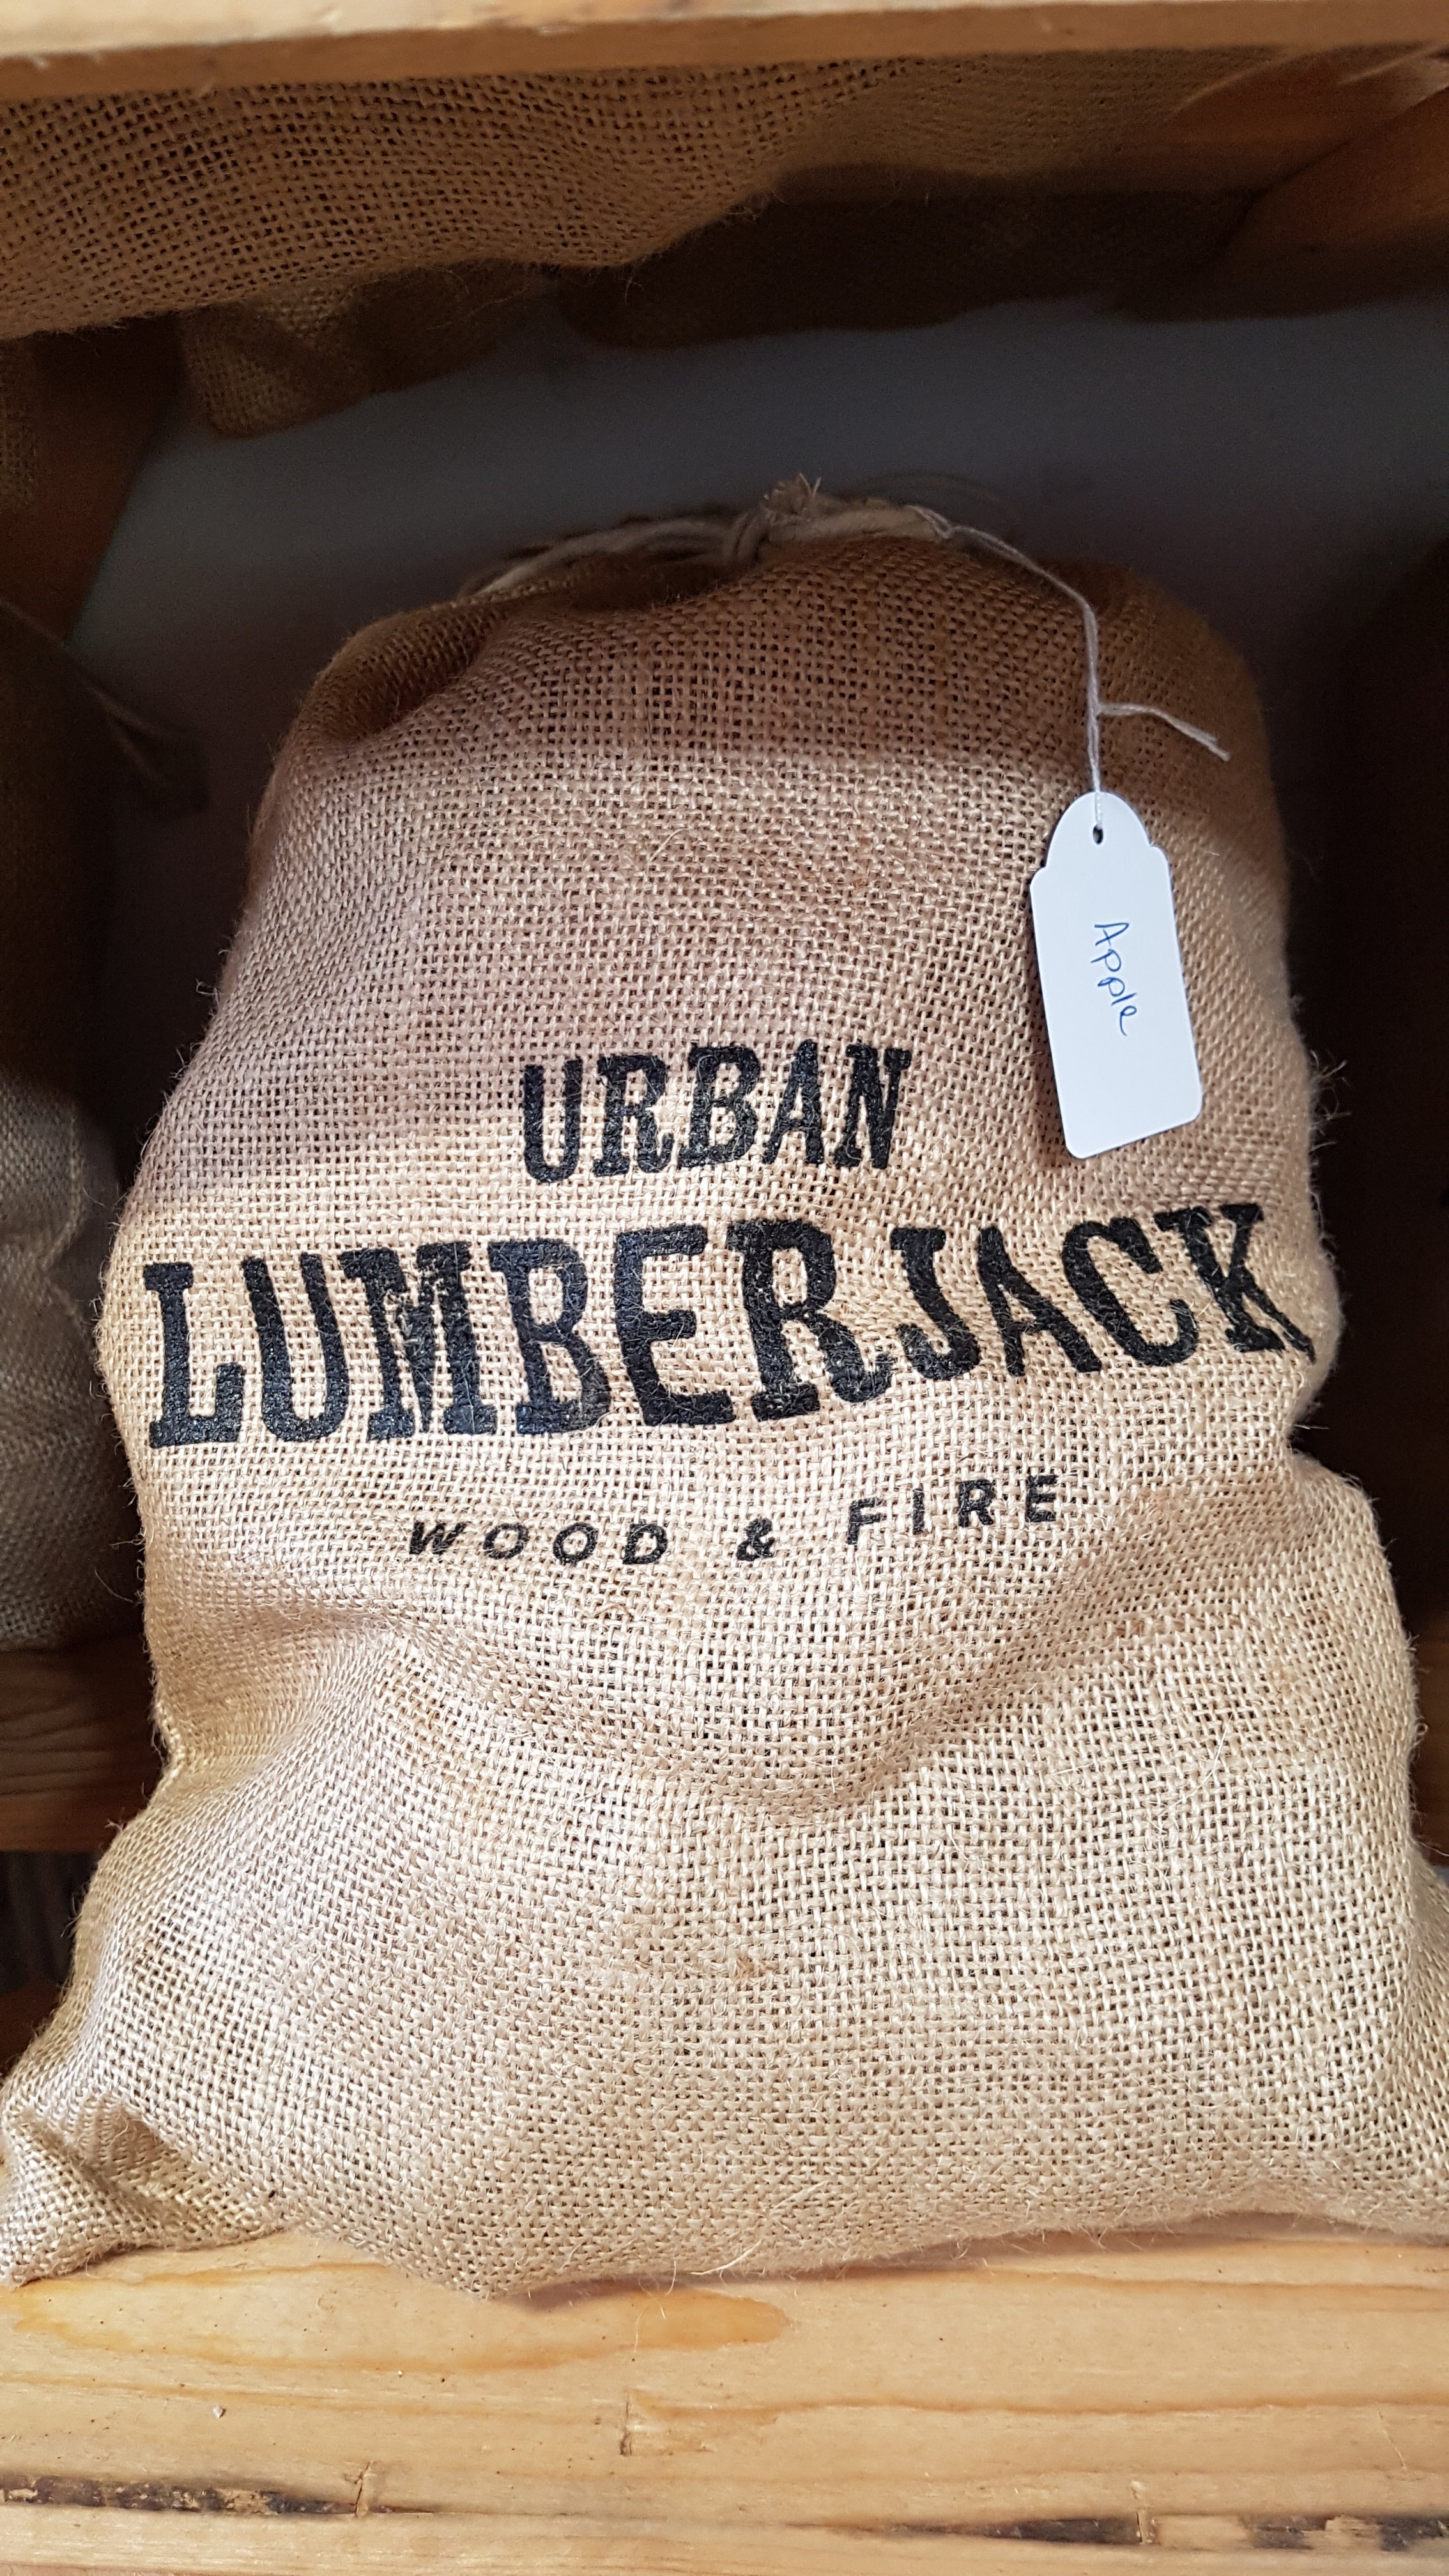 Apple Wood Chunks 3kg by Urban Lumberjack